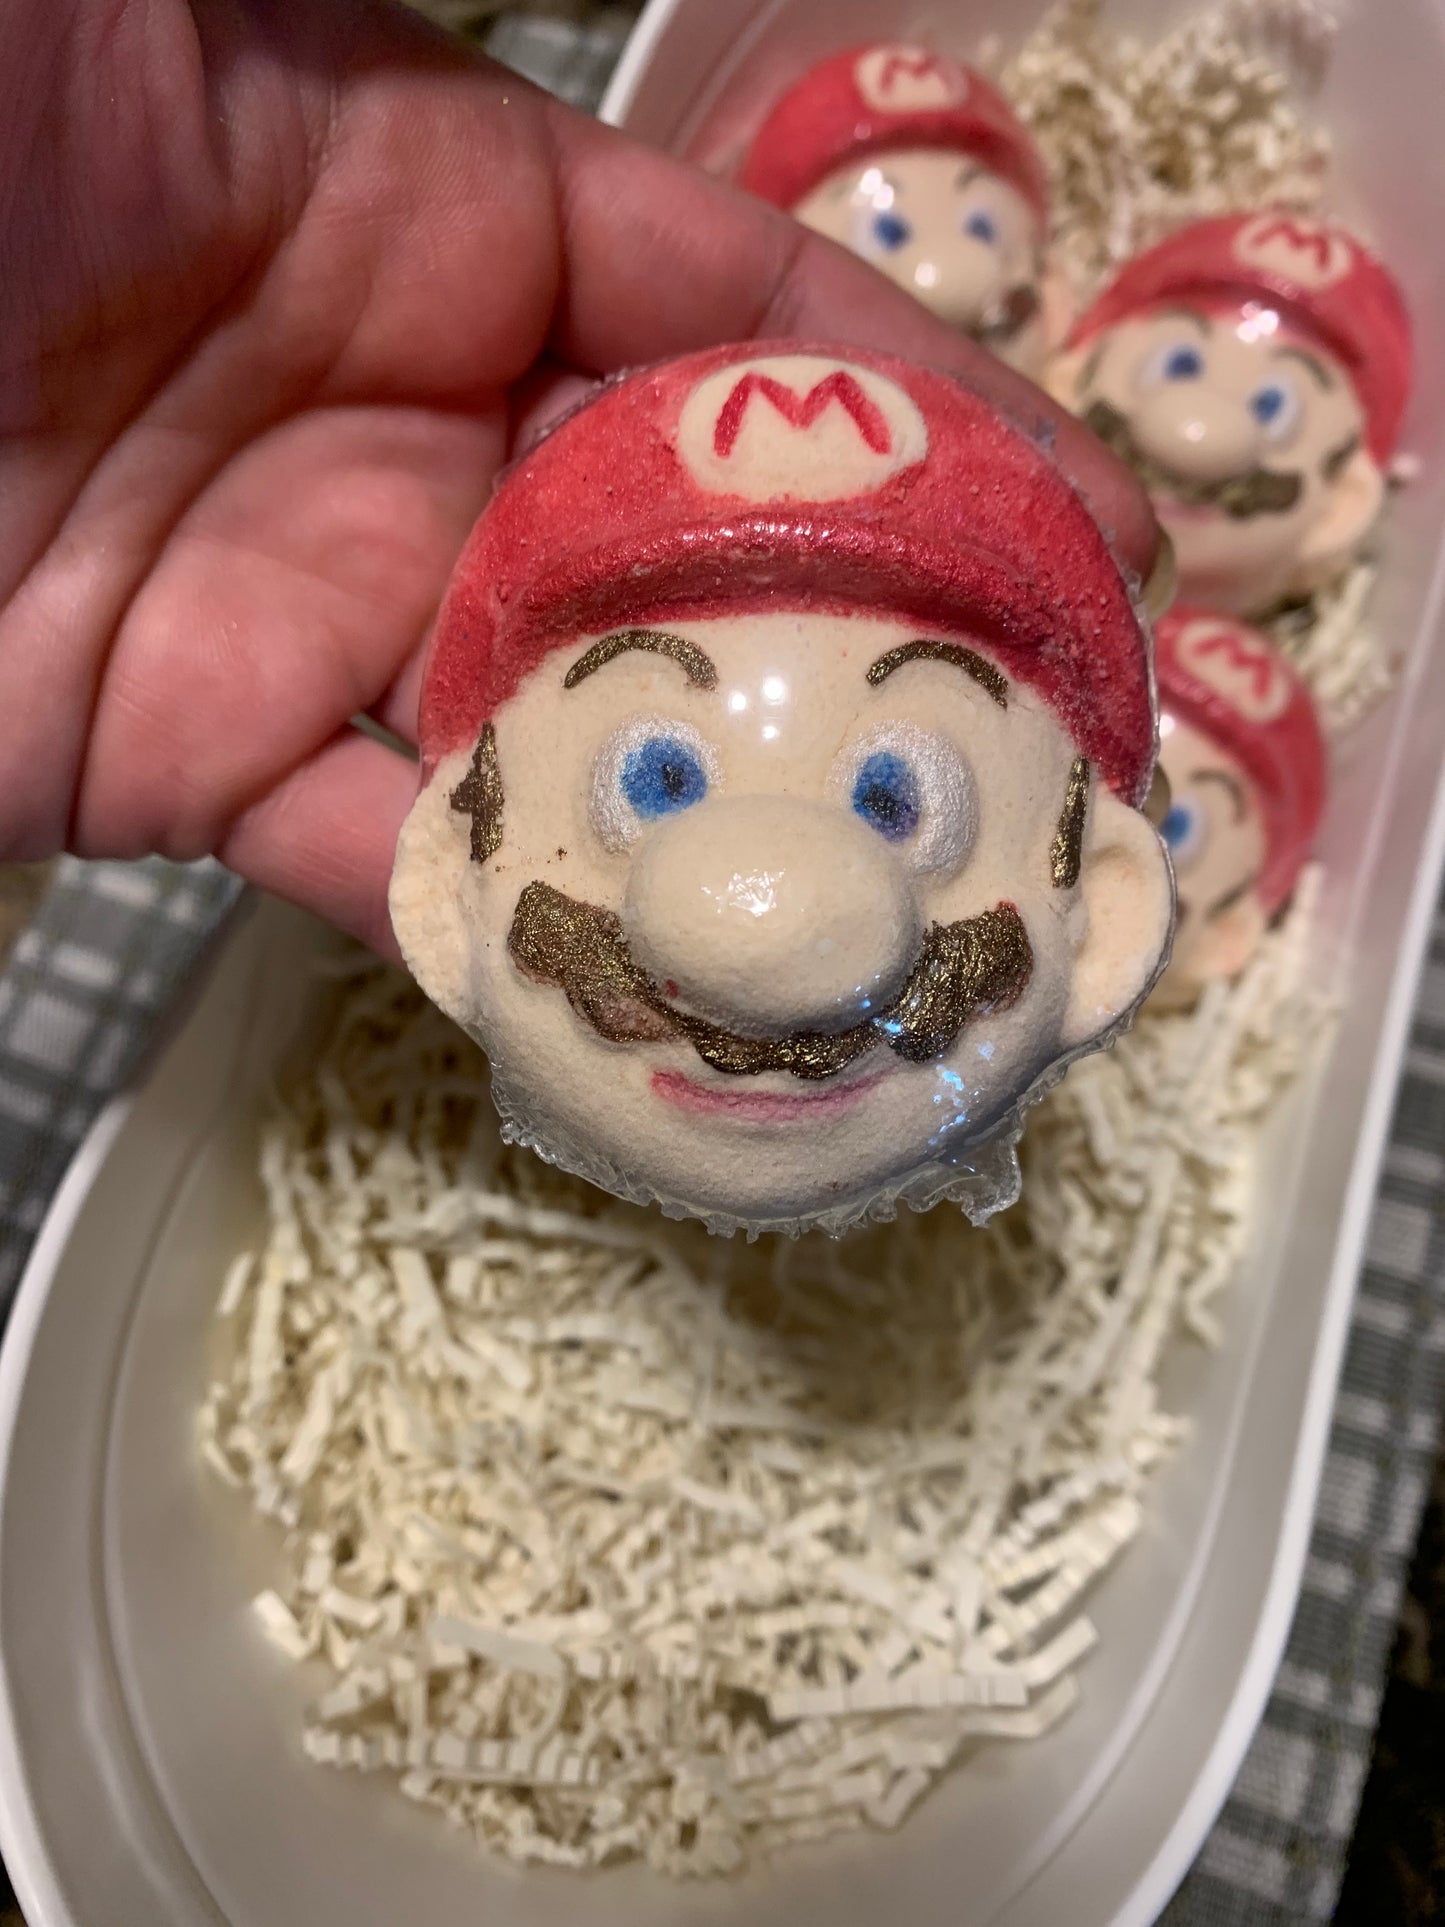 Mario Bros. Character Bath Bombs